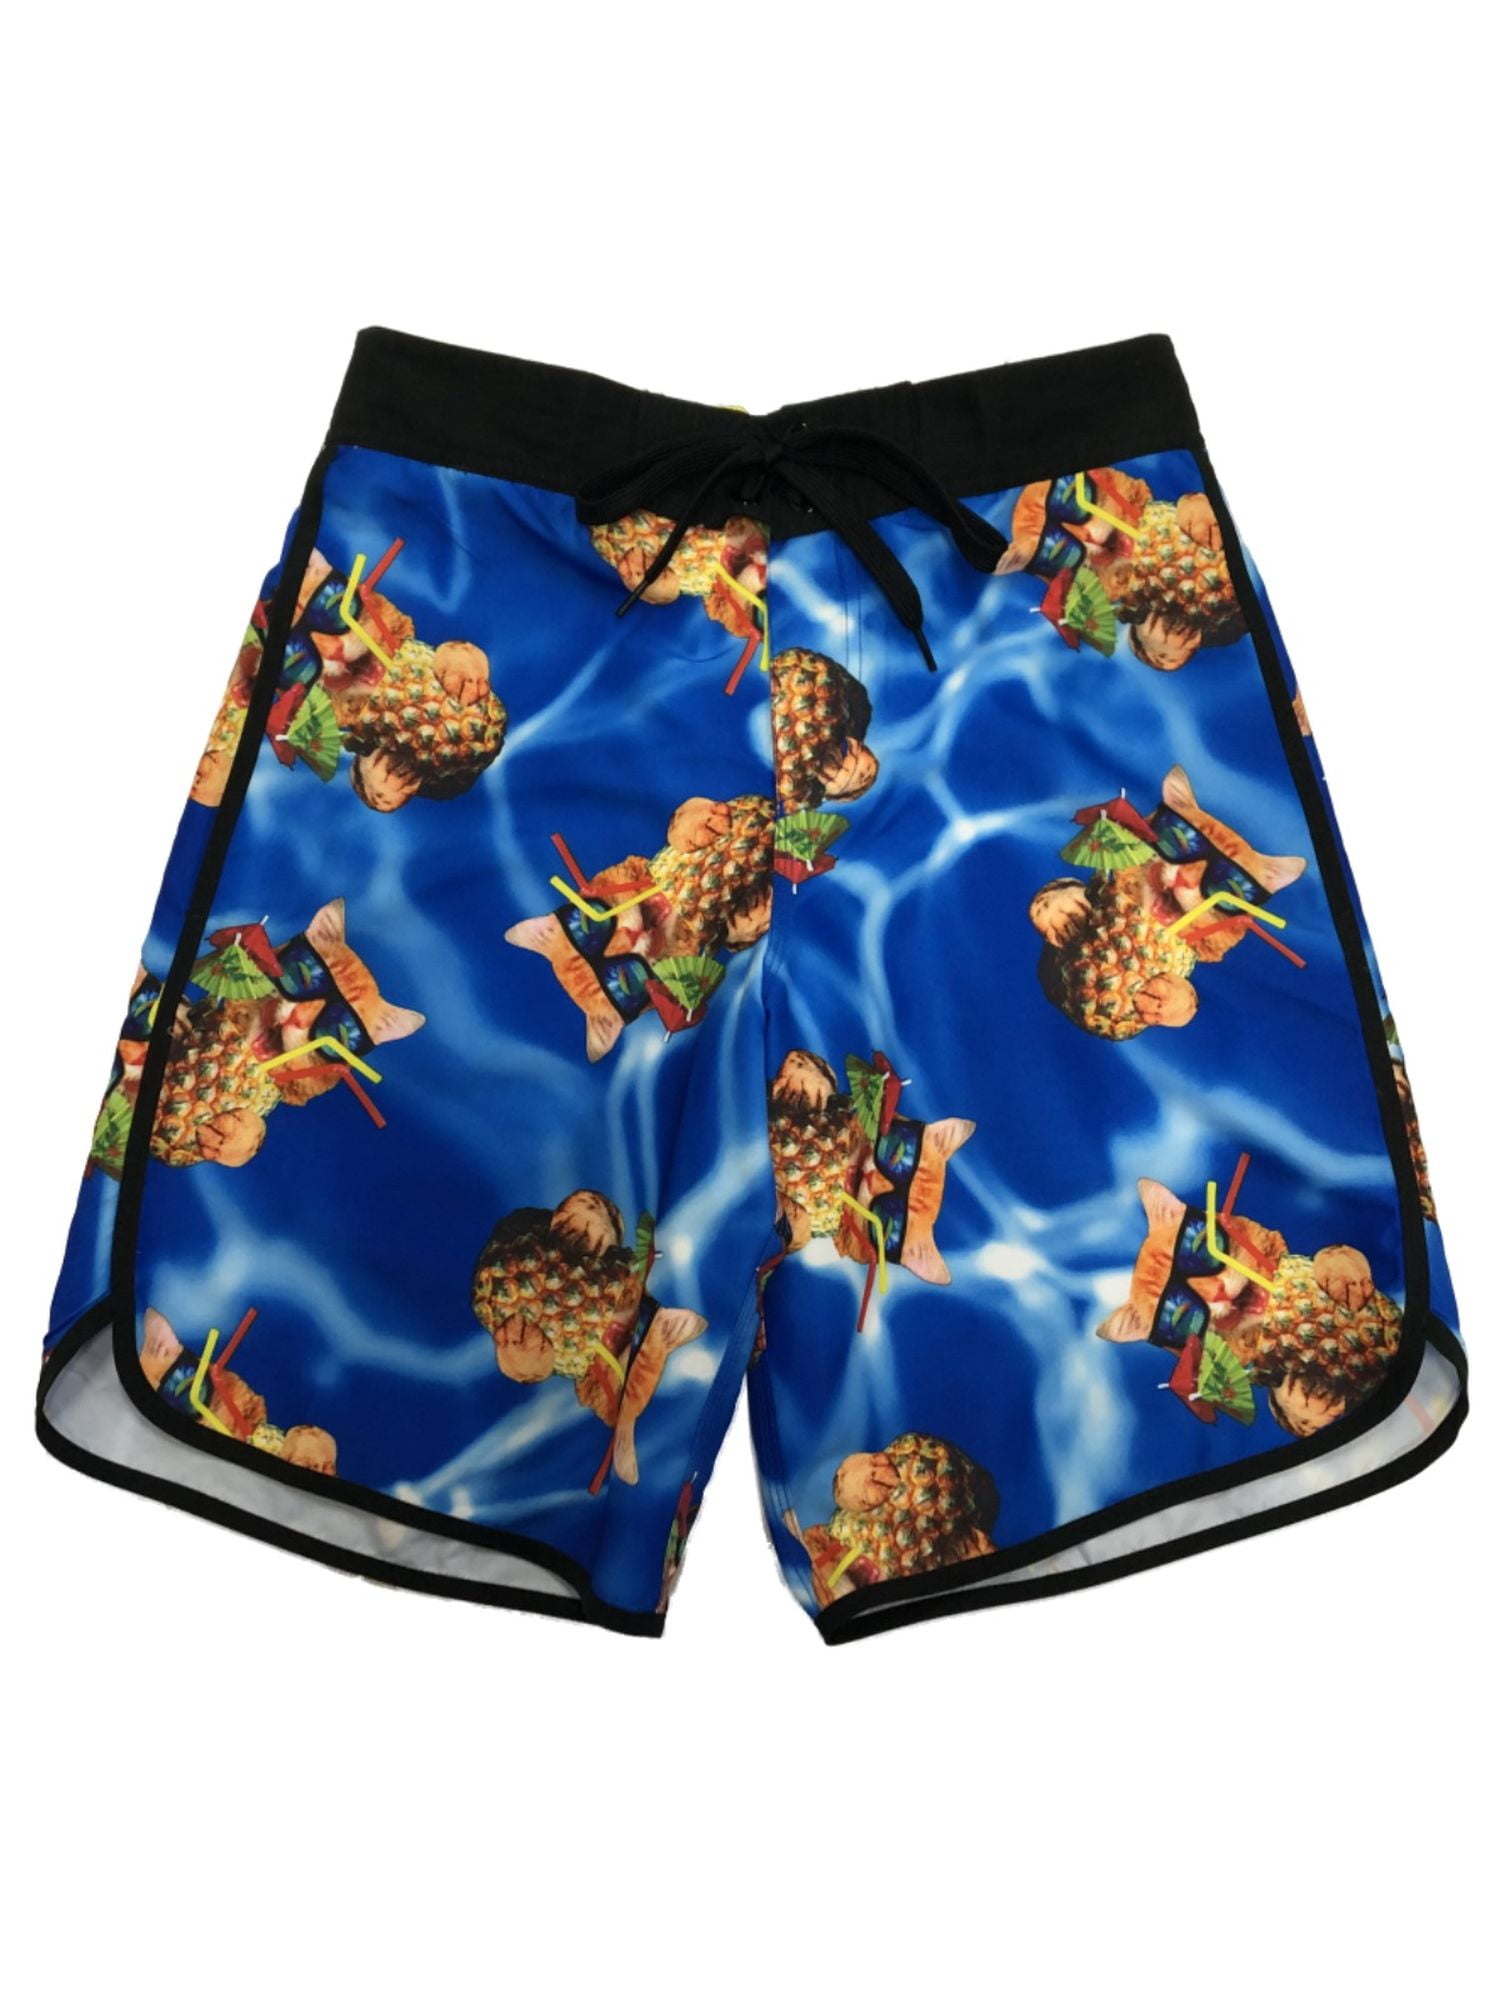 TIZORAX Leopard Paw Prints Men Swimwear Bikini Underwear Swim Trunks Summer Beach Shorts Brief Boxer Pants S